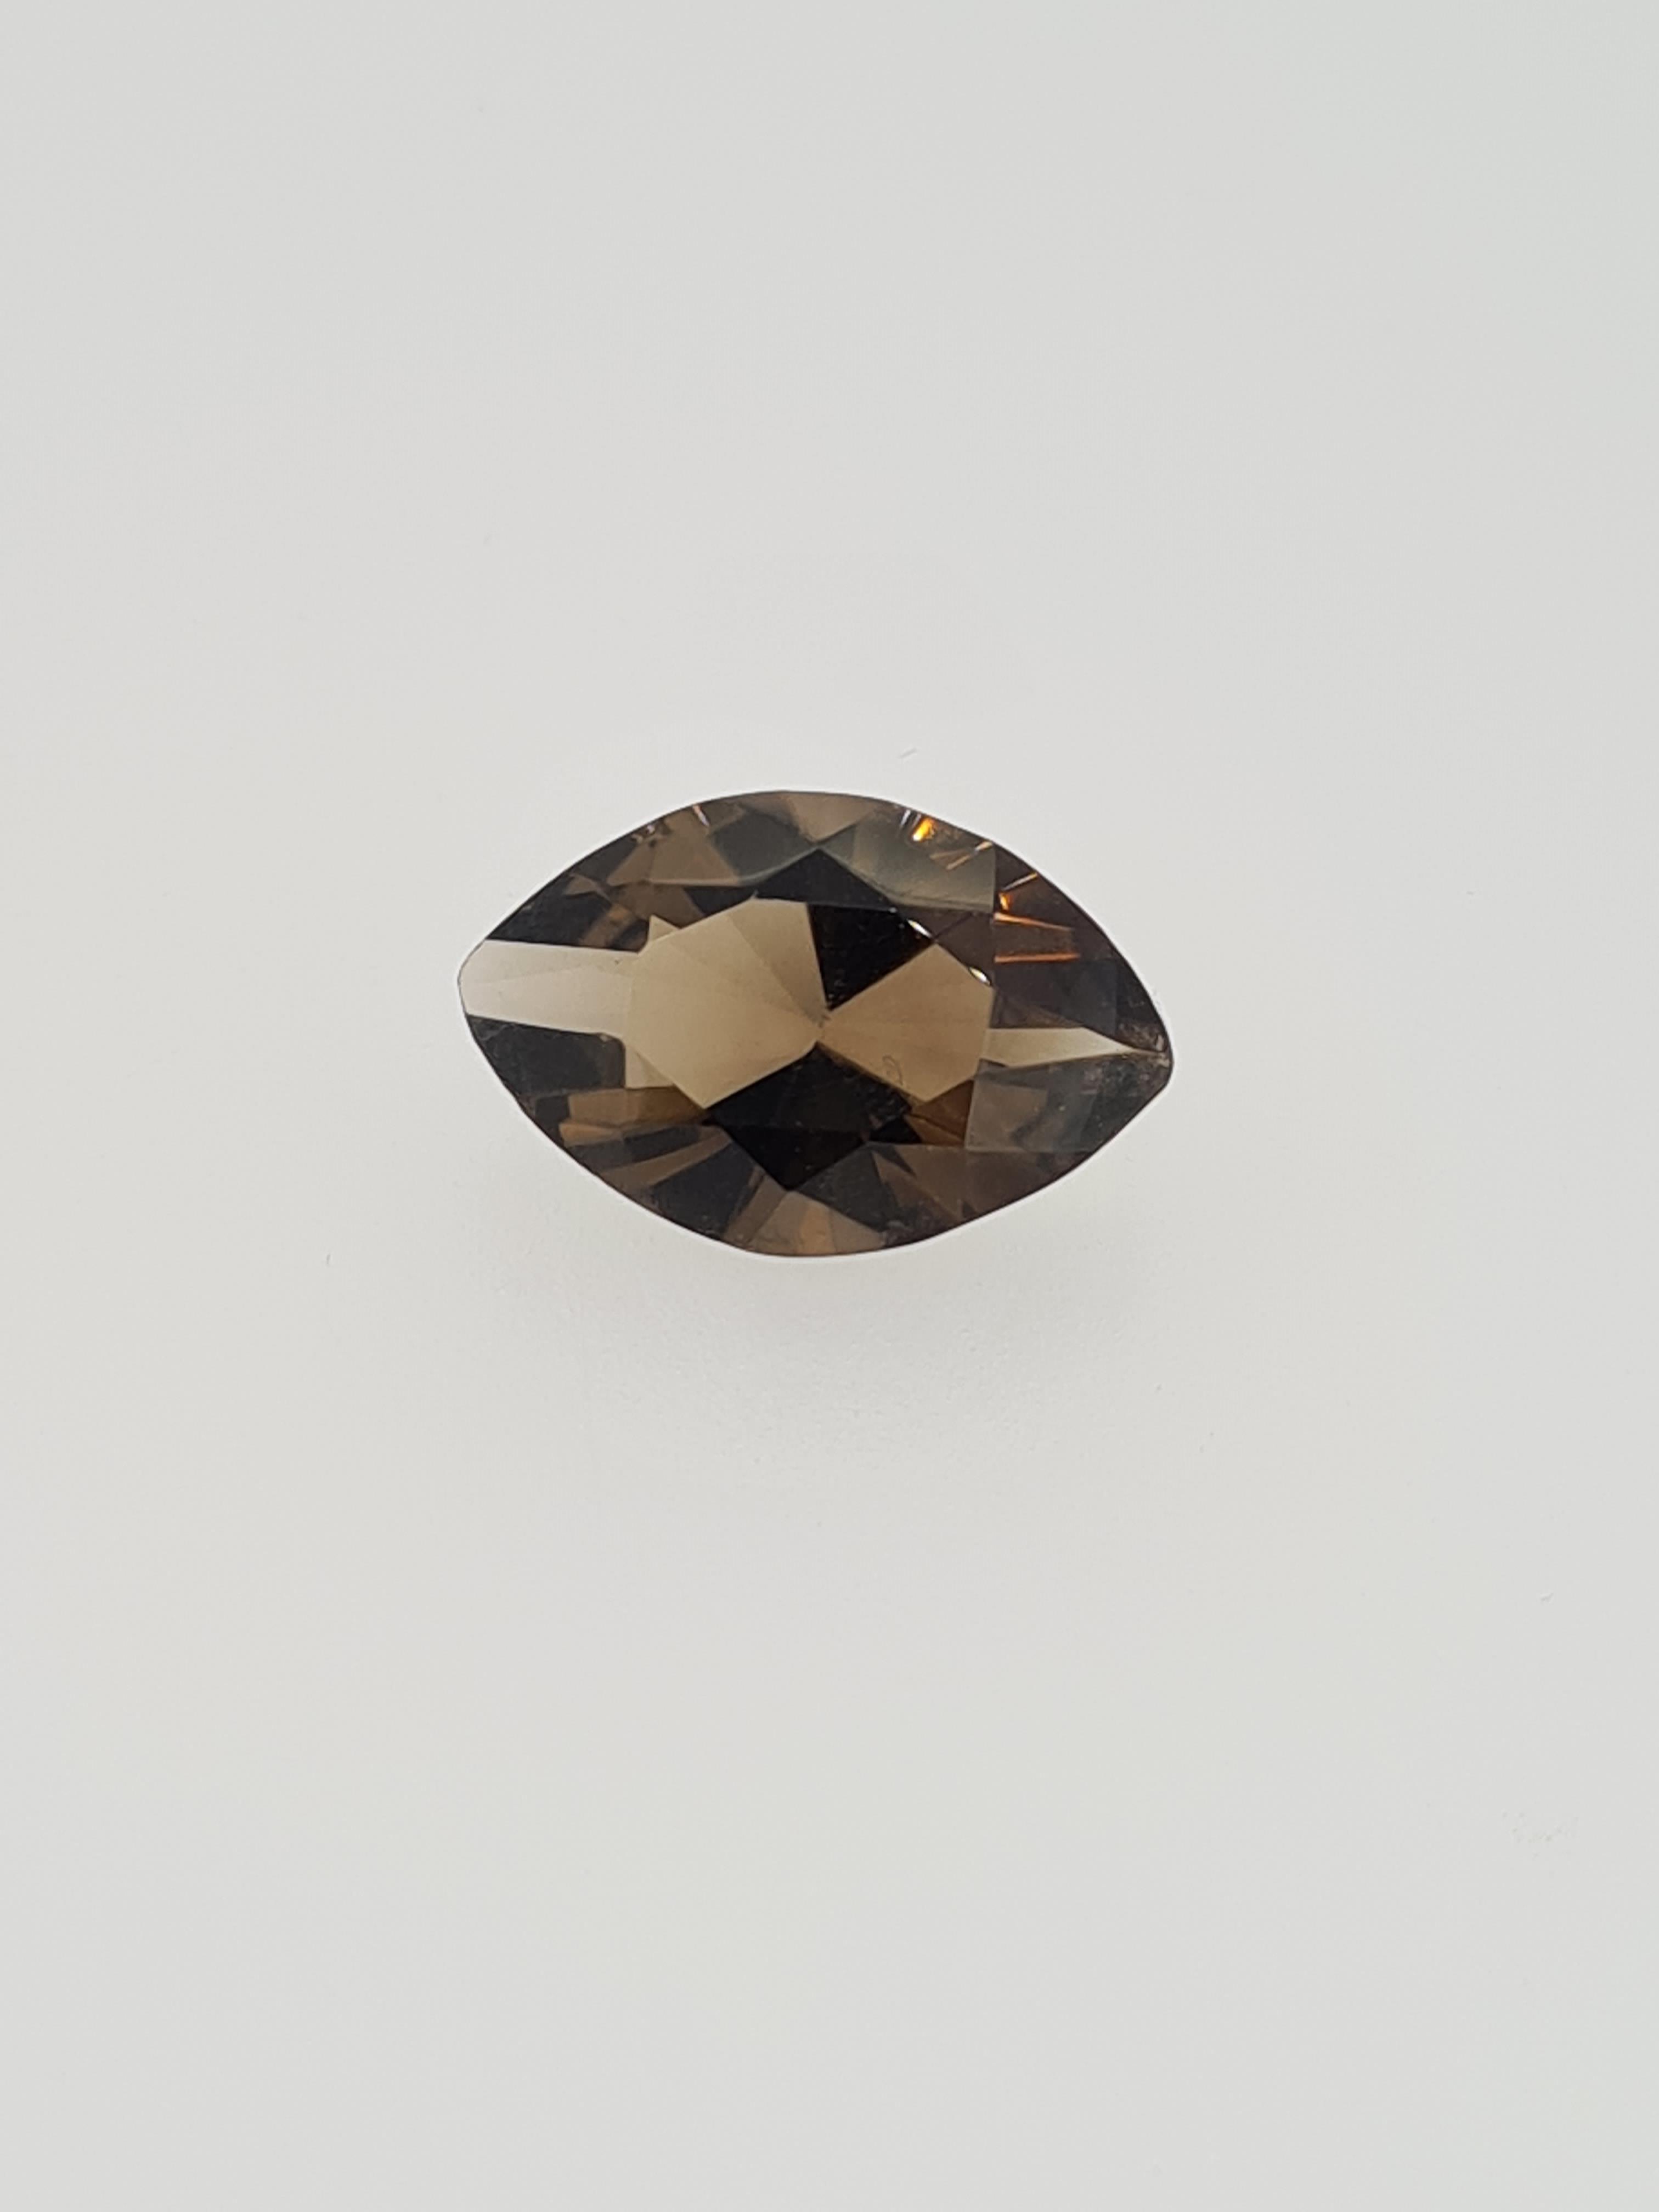 Smokey quartz marquise cut gem stone - Image 4 of 5